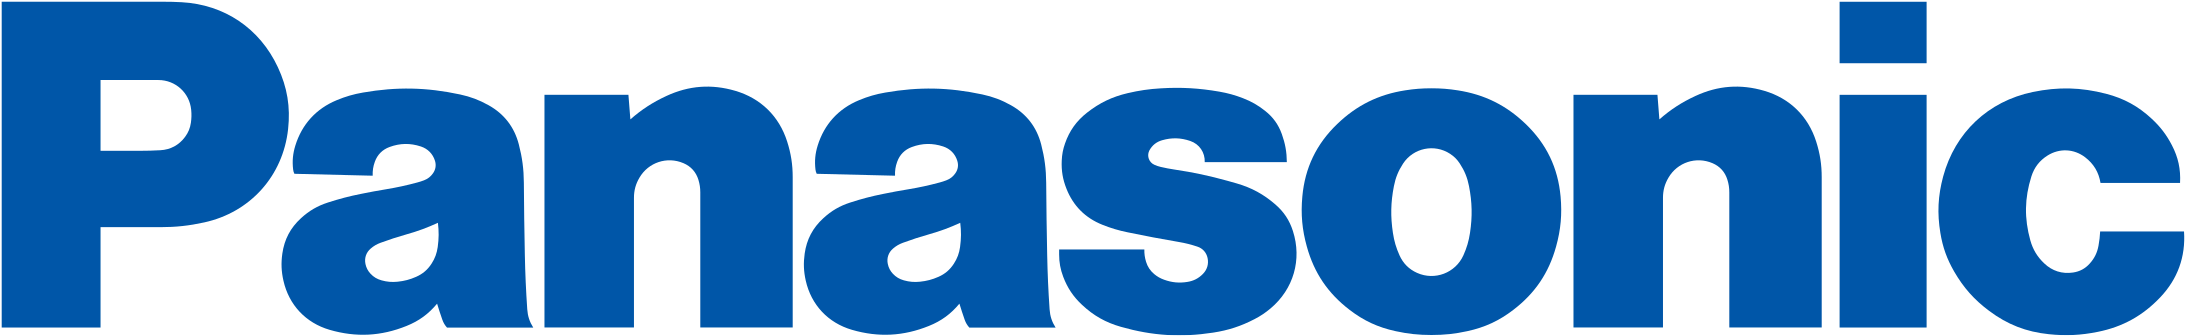 Logo de Panasonic - Clientes Analytics Plus - Honduras